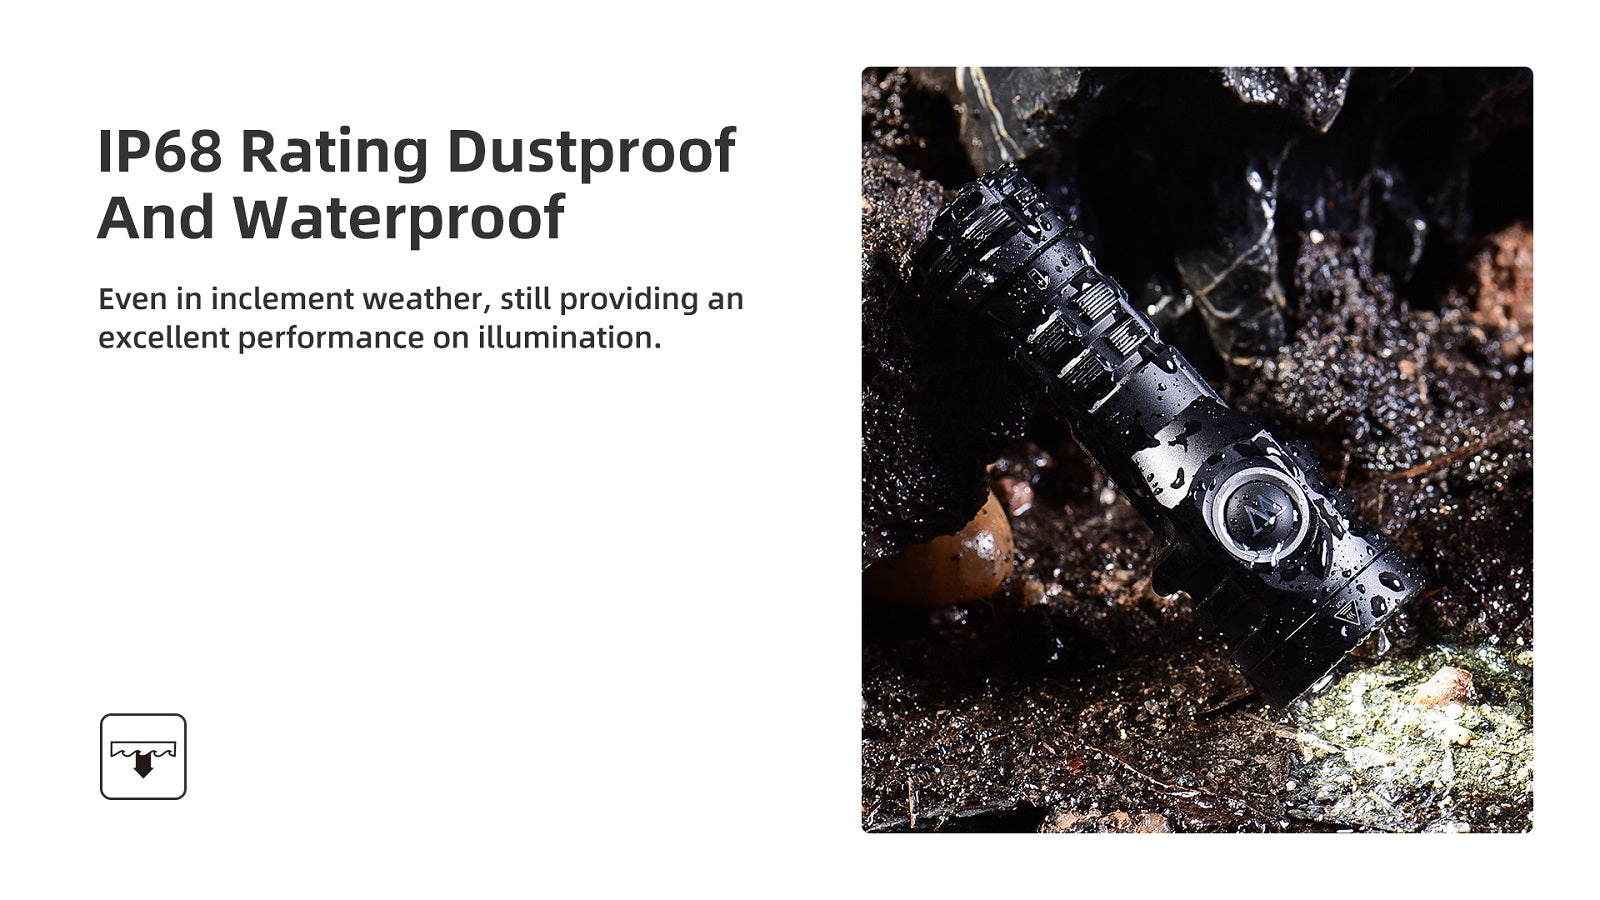 IP68 Rating DustproofAnd Waterproof